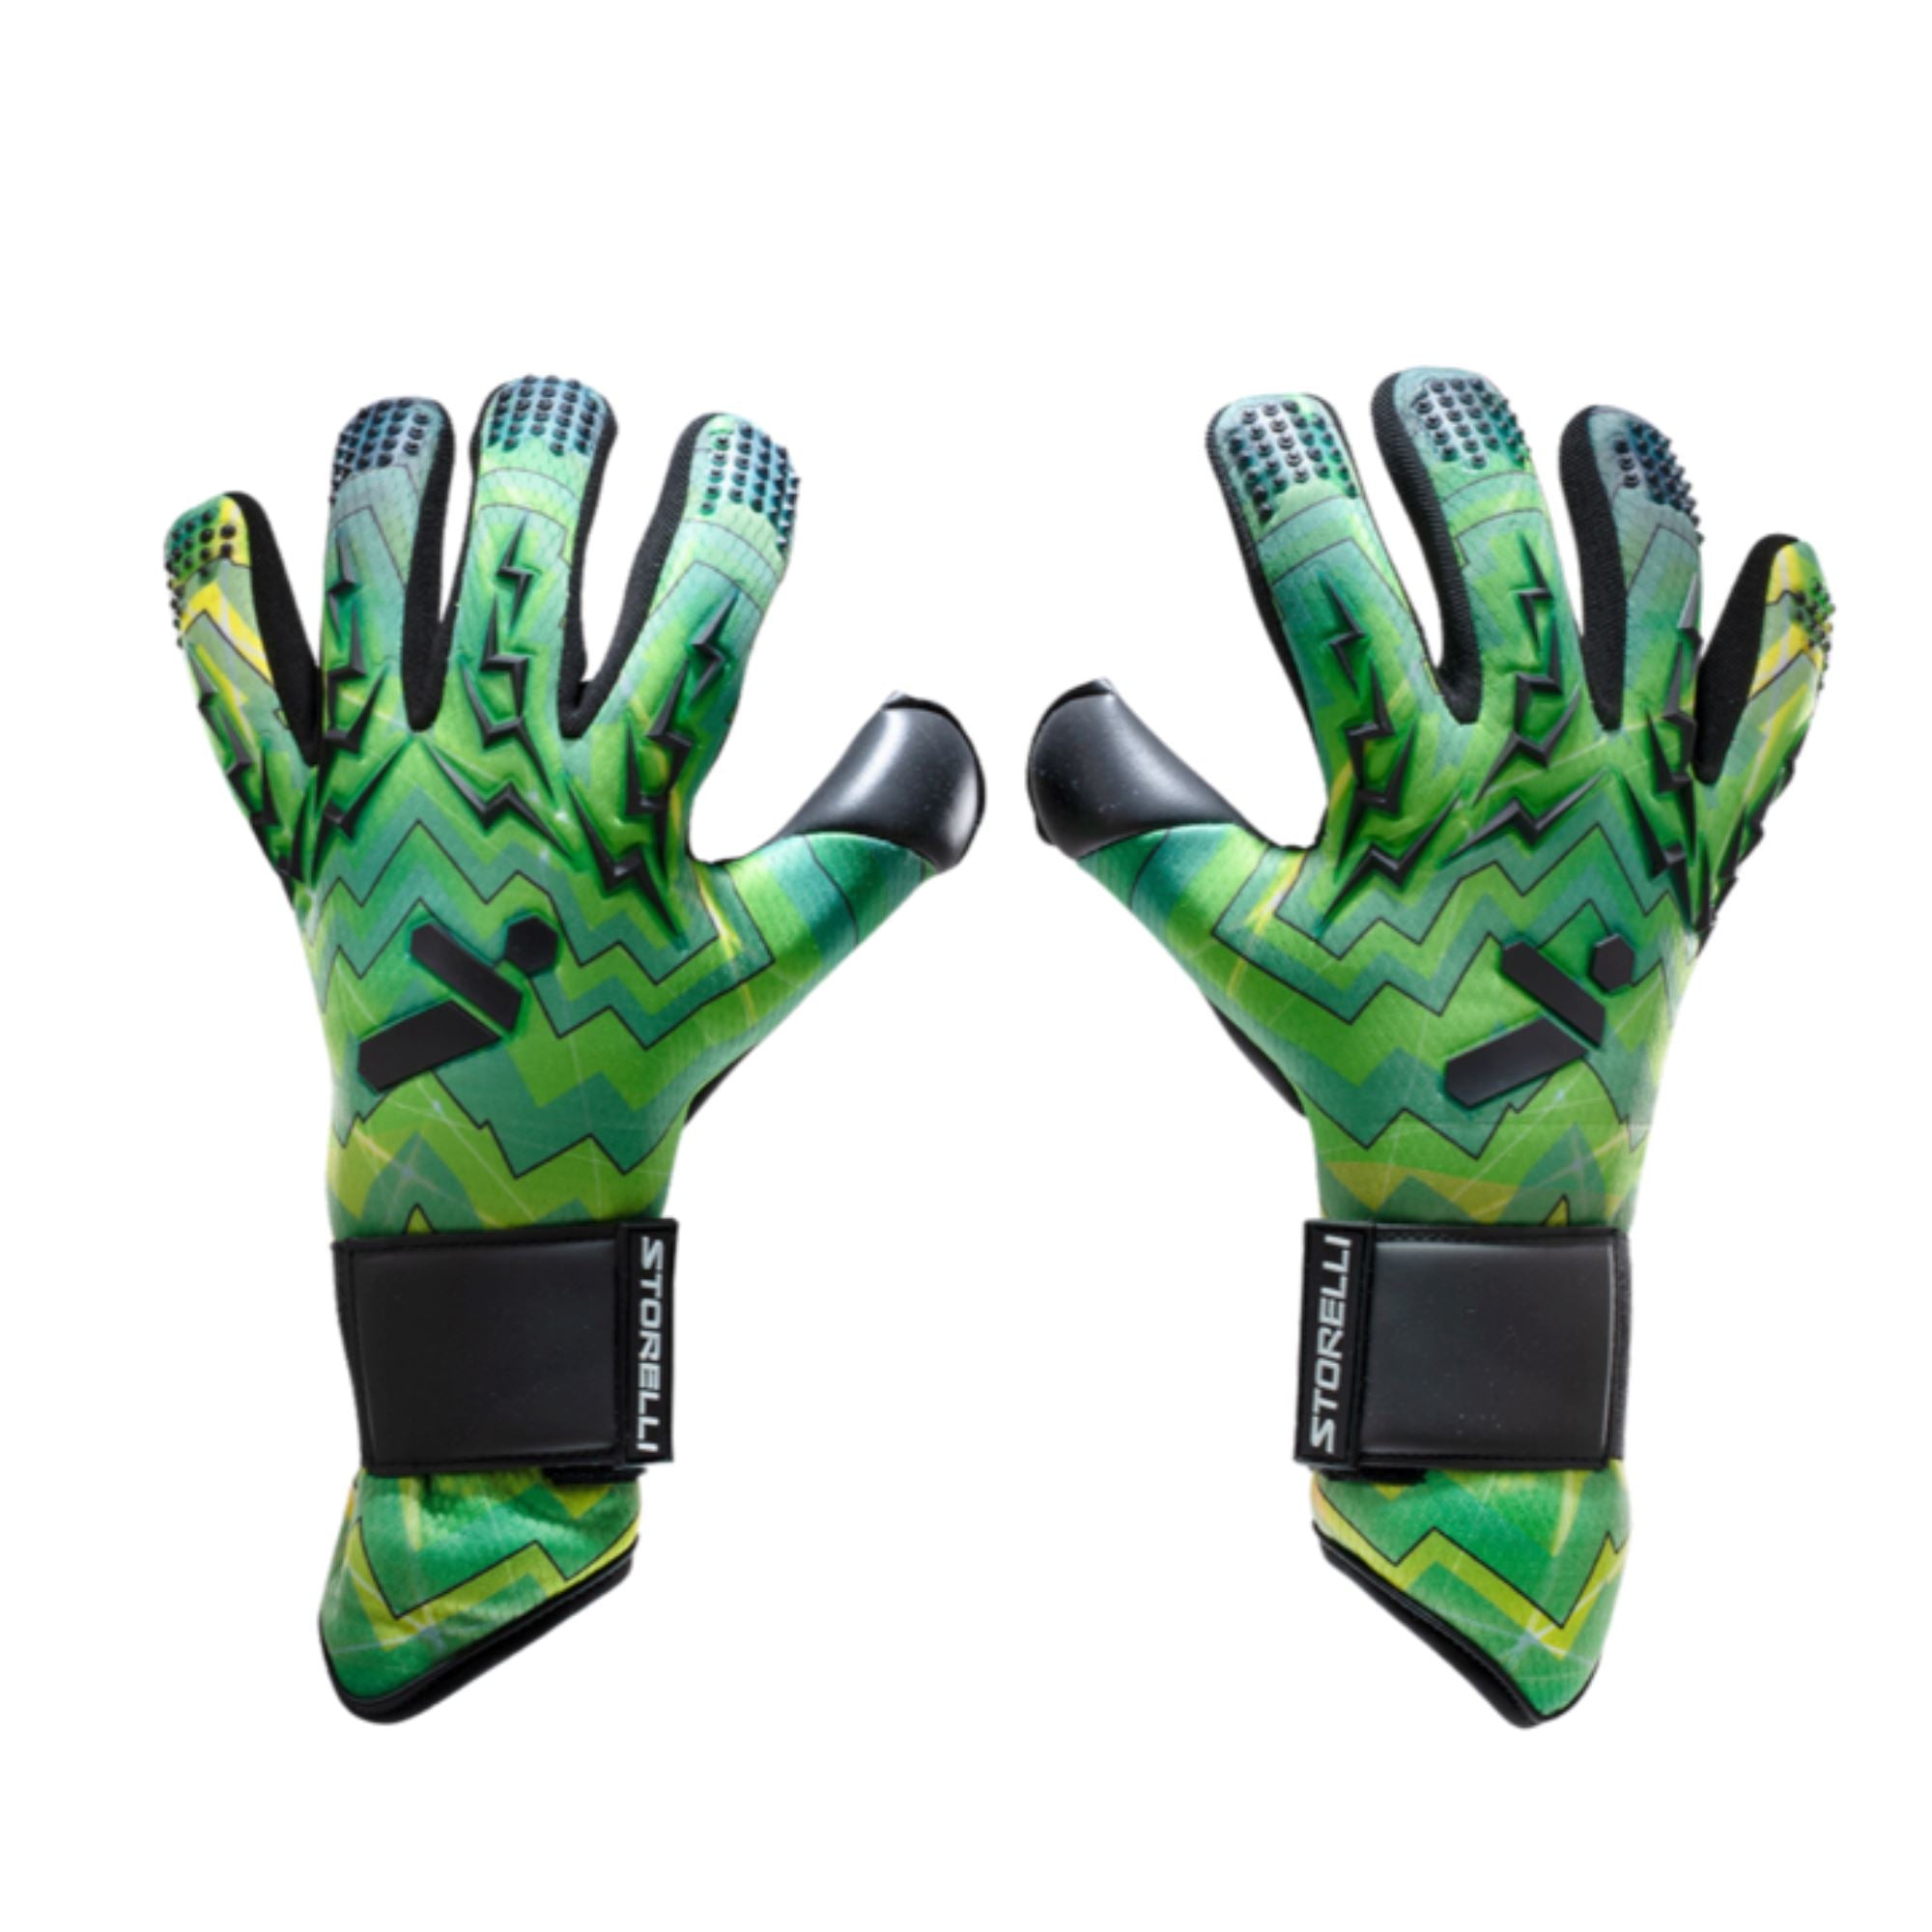 Lightening Goalkeeper Gloves by Storelli - ITASPORT